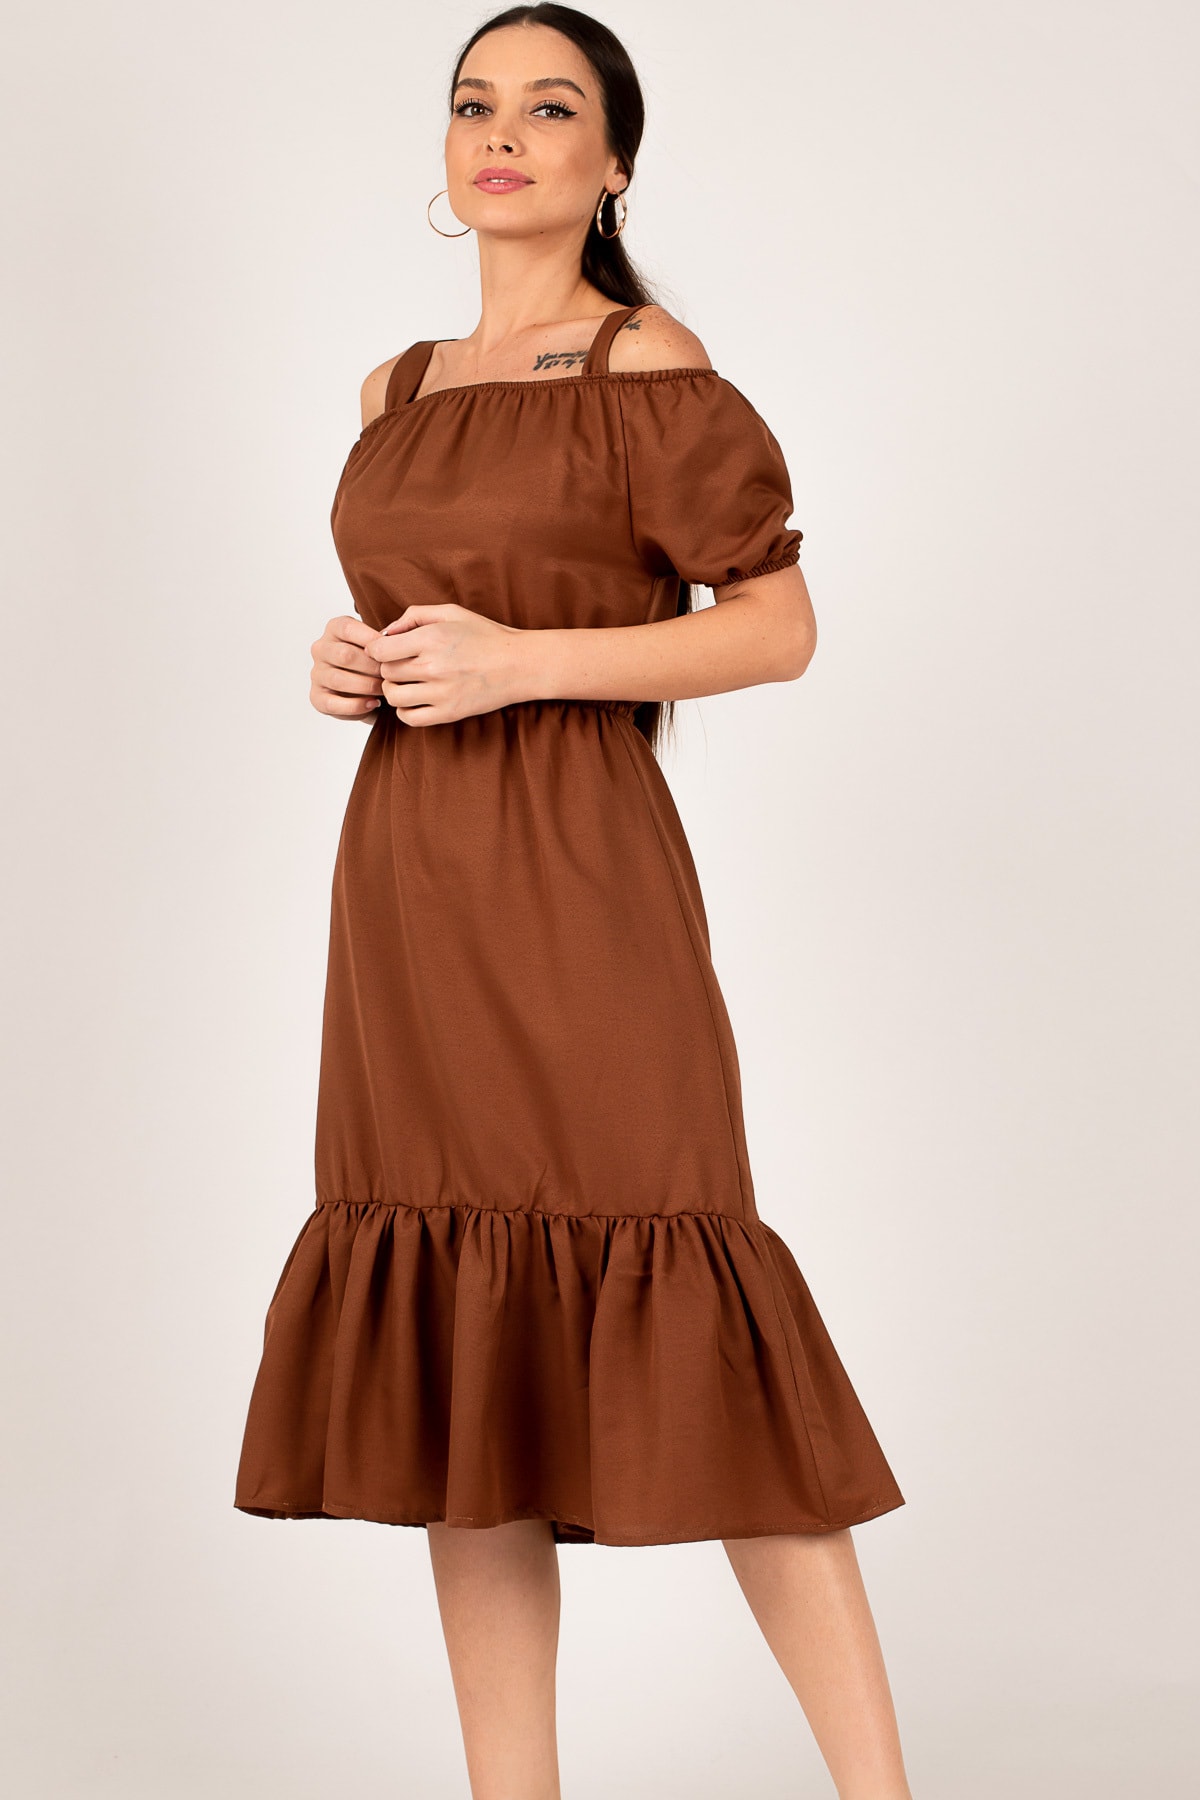 Levně armonika Women's Brown Dress with Elastic Waist, Straps